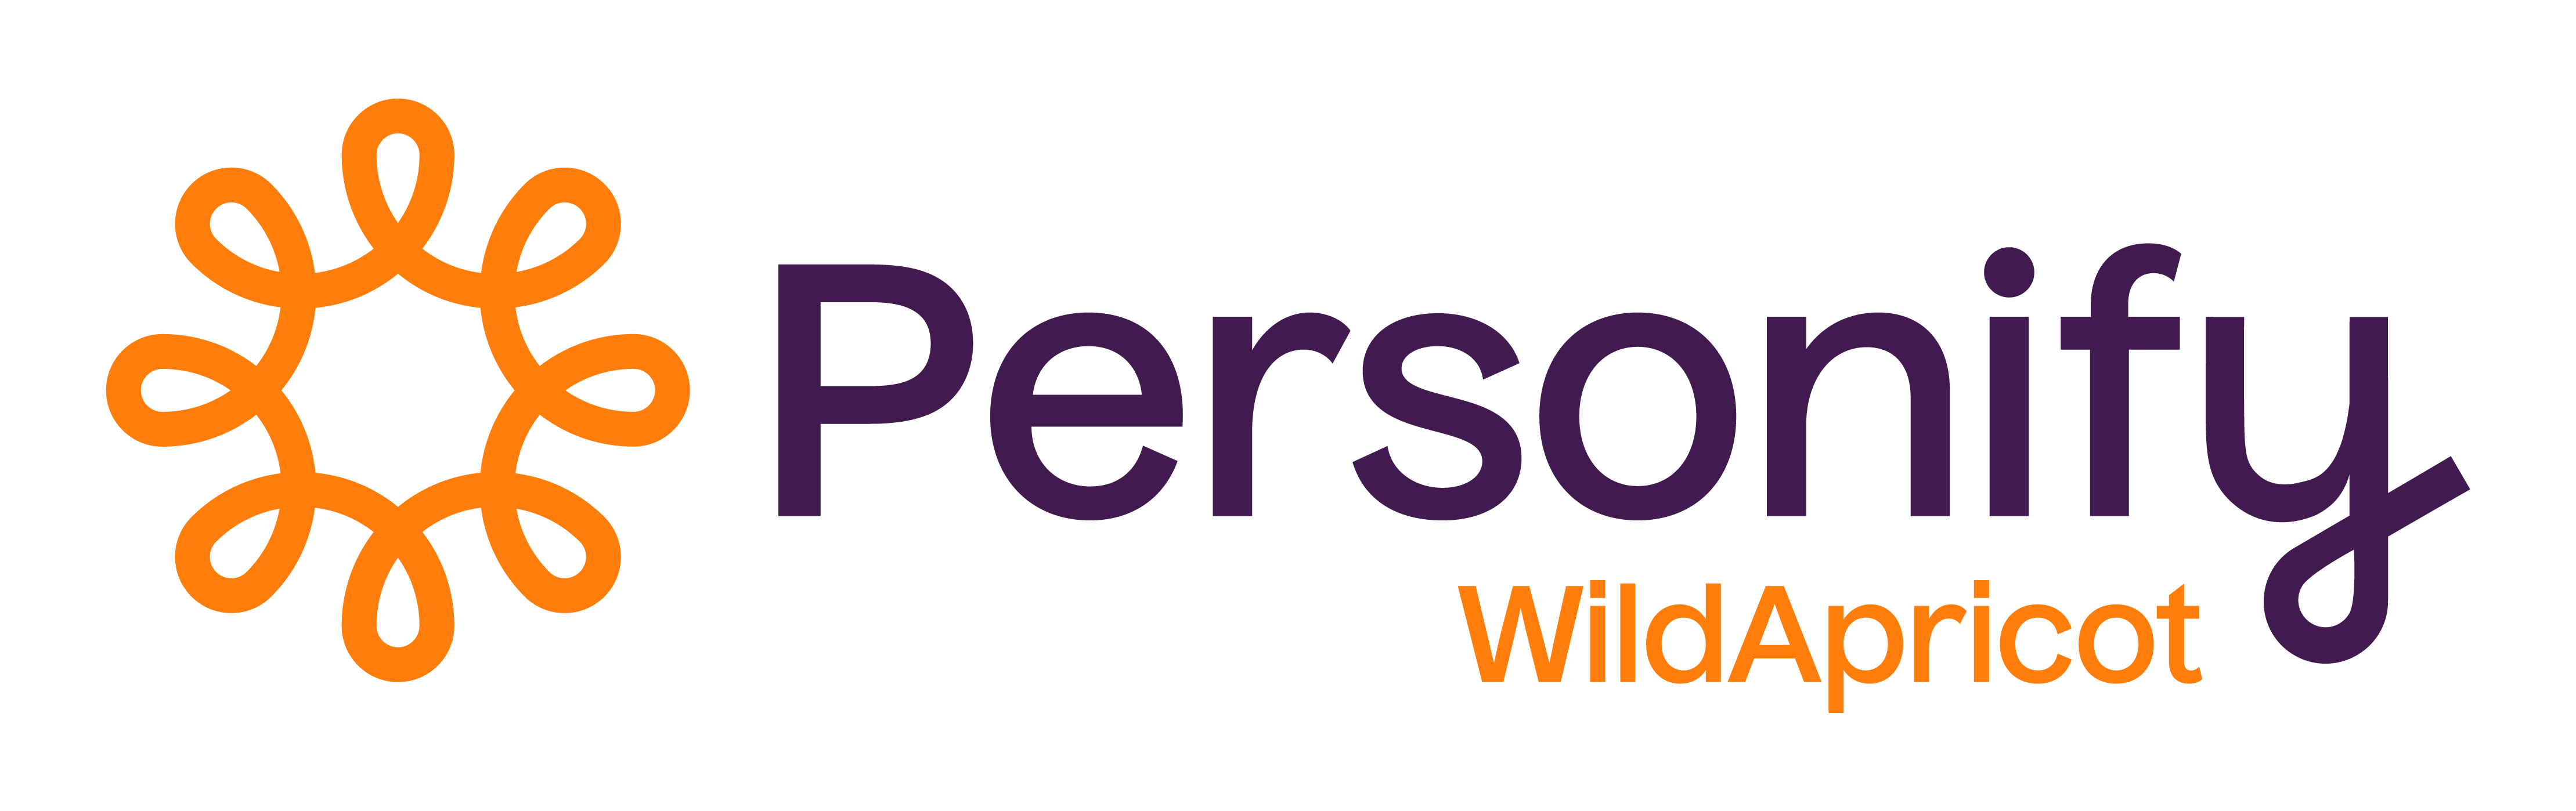 WildApricot Partner Program